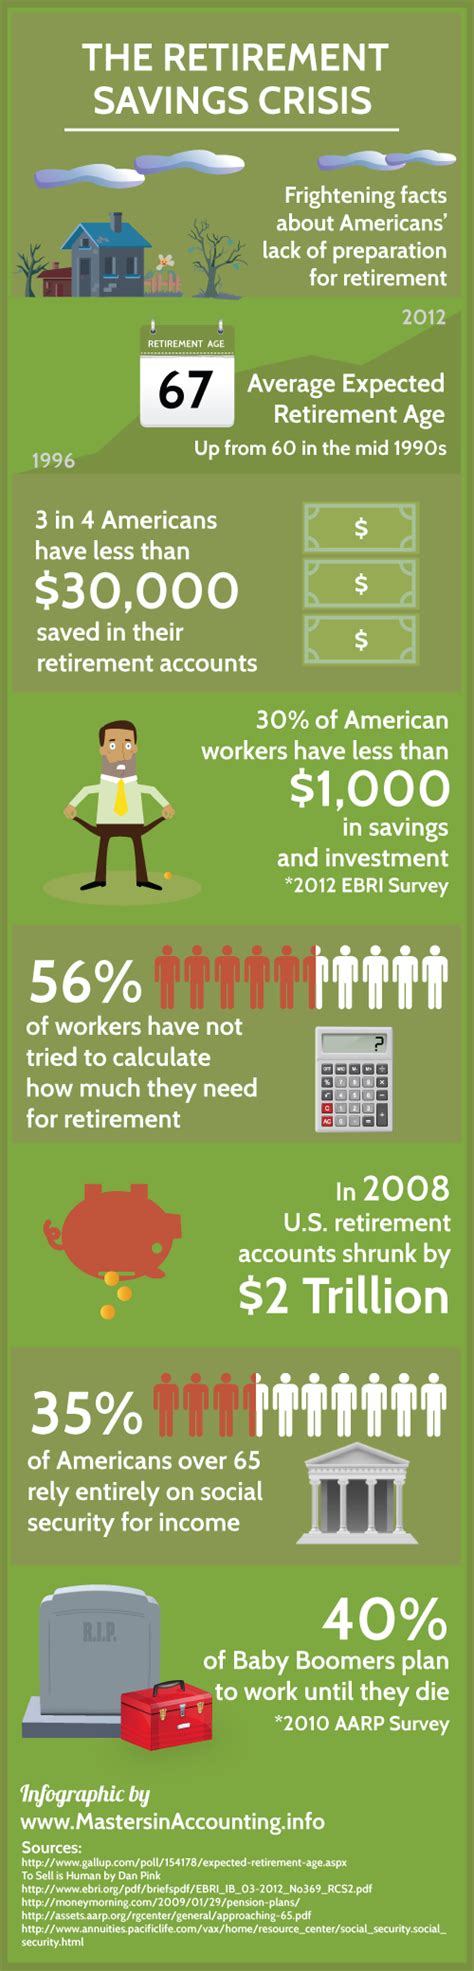 Infographic The Retirement Savings Crisis